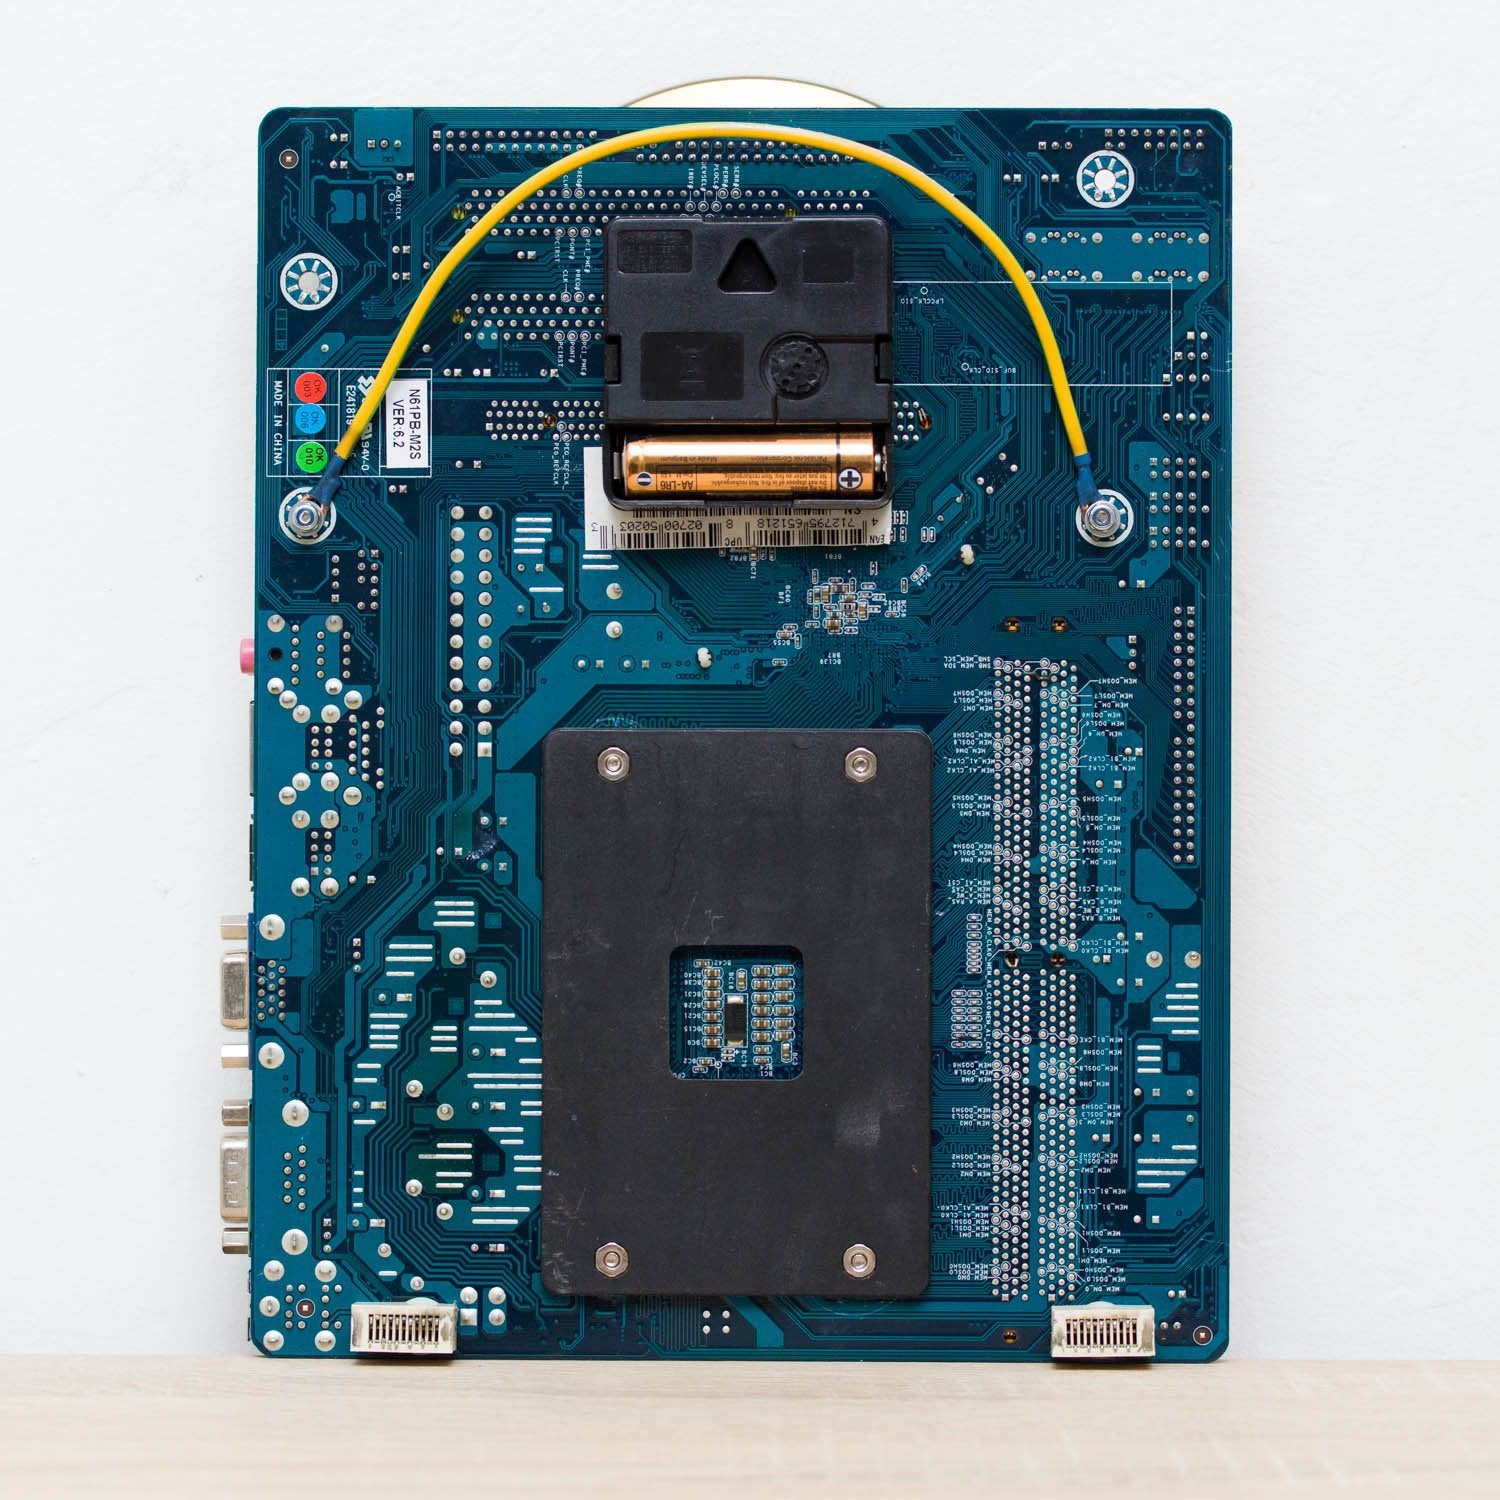 Wall Clock made of blue Circuit Board